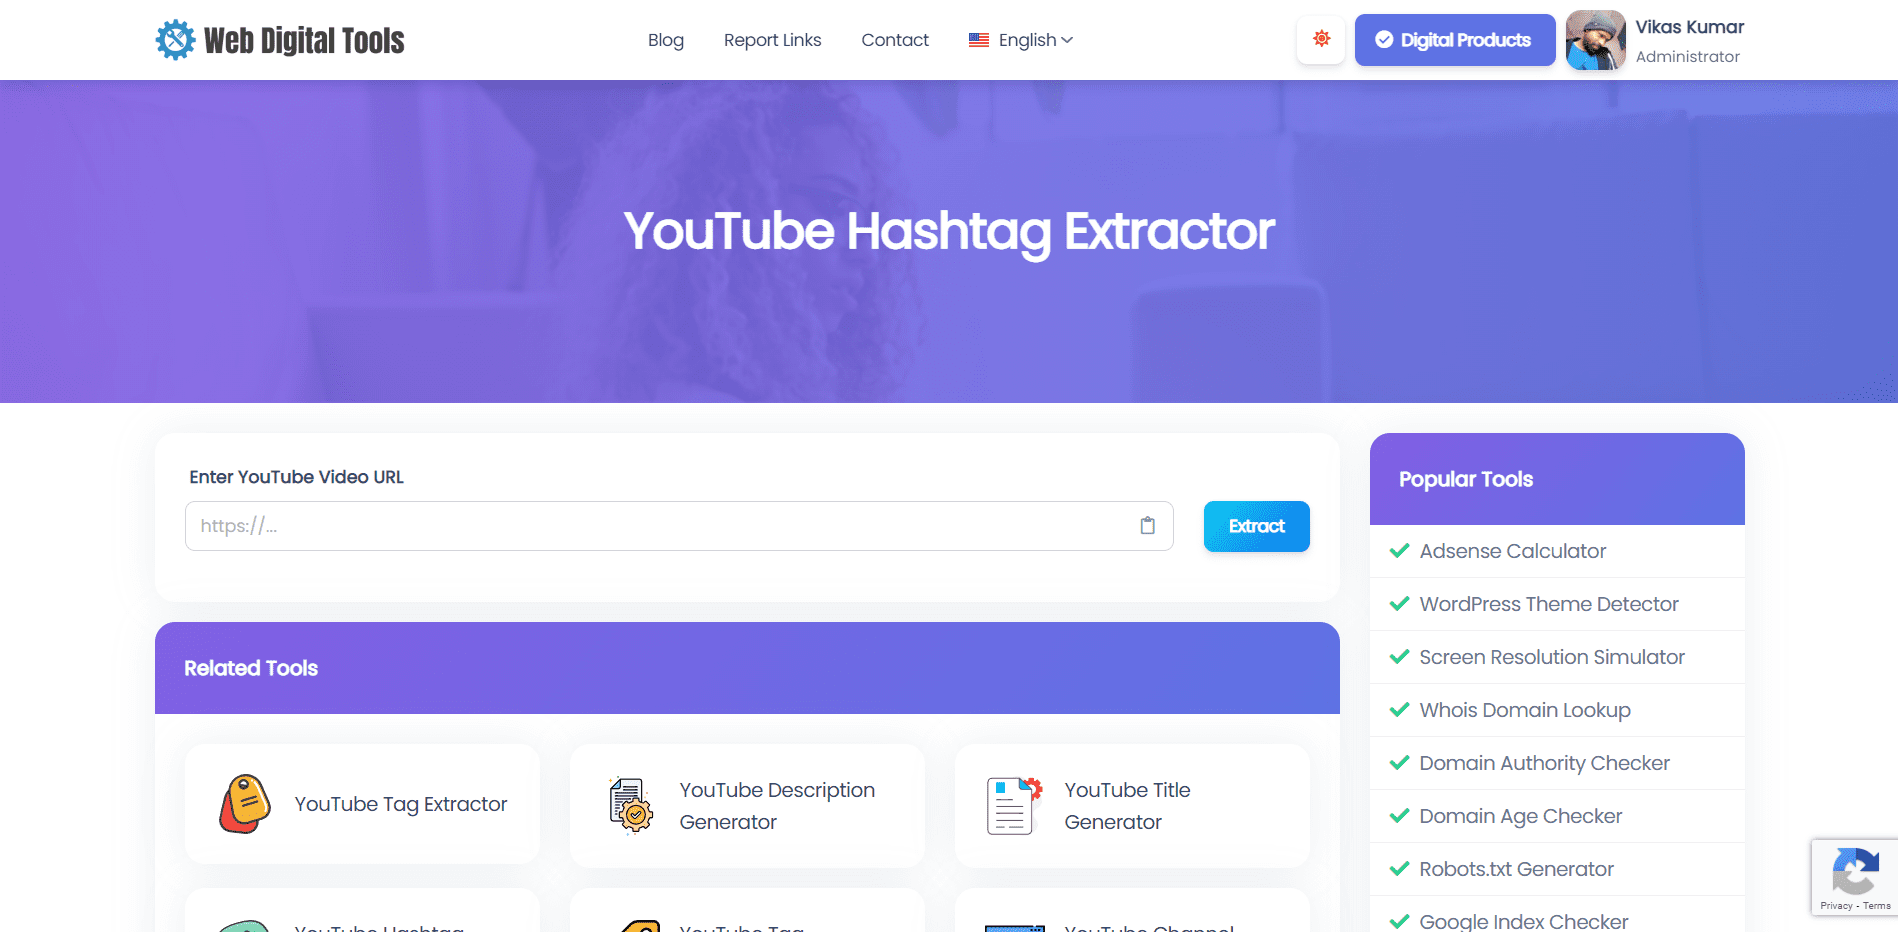 YouTube Hashtag Extractor